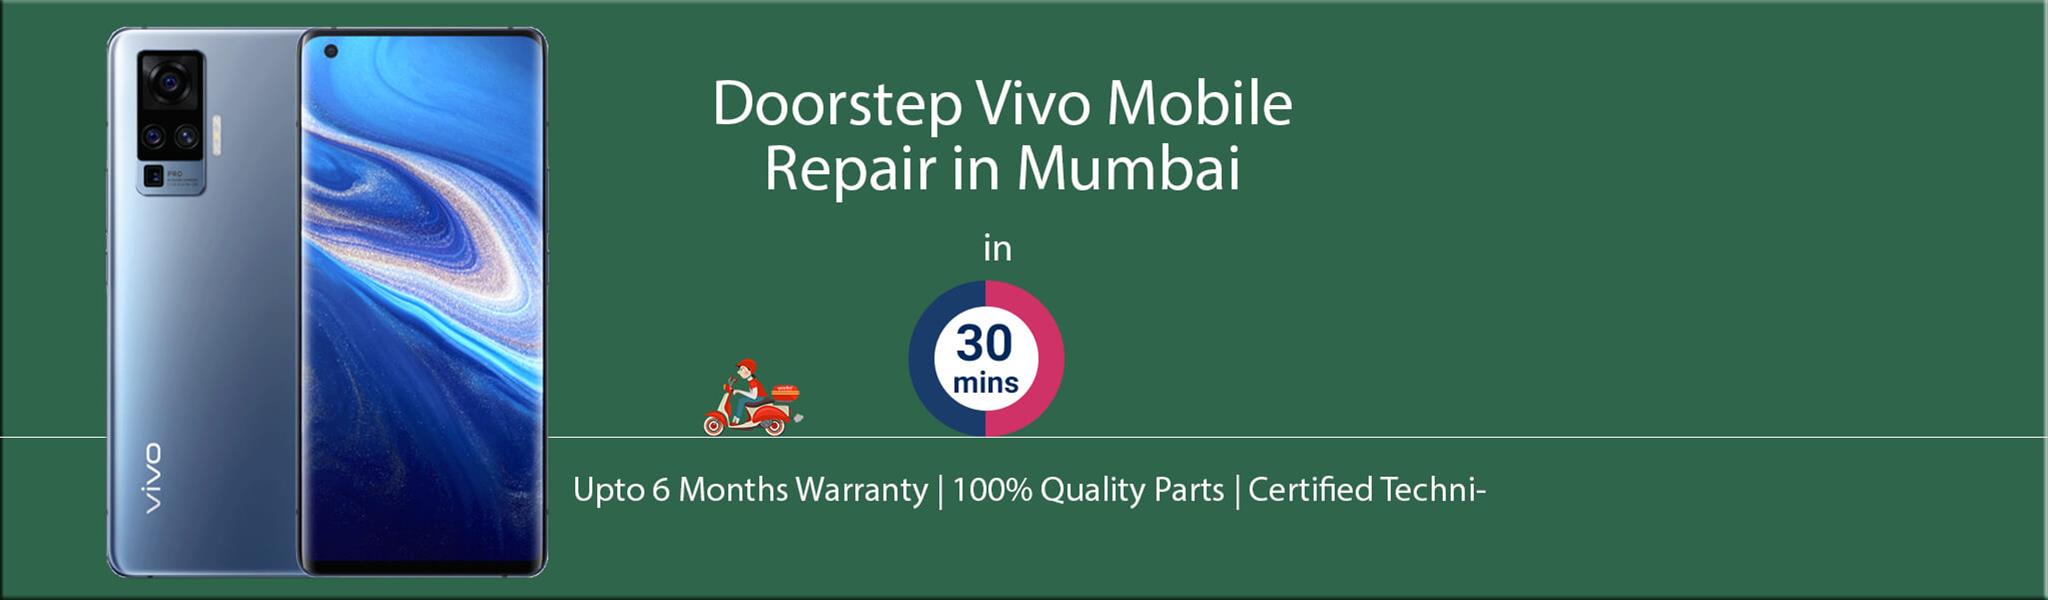 vivo-repair-service-banner-mumbai.jpg